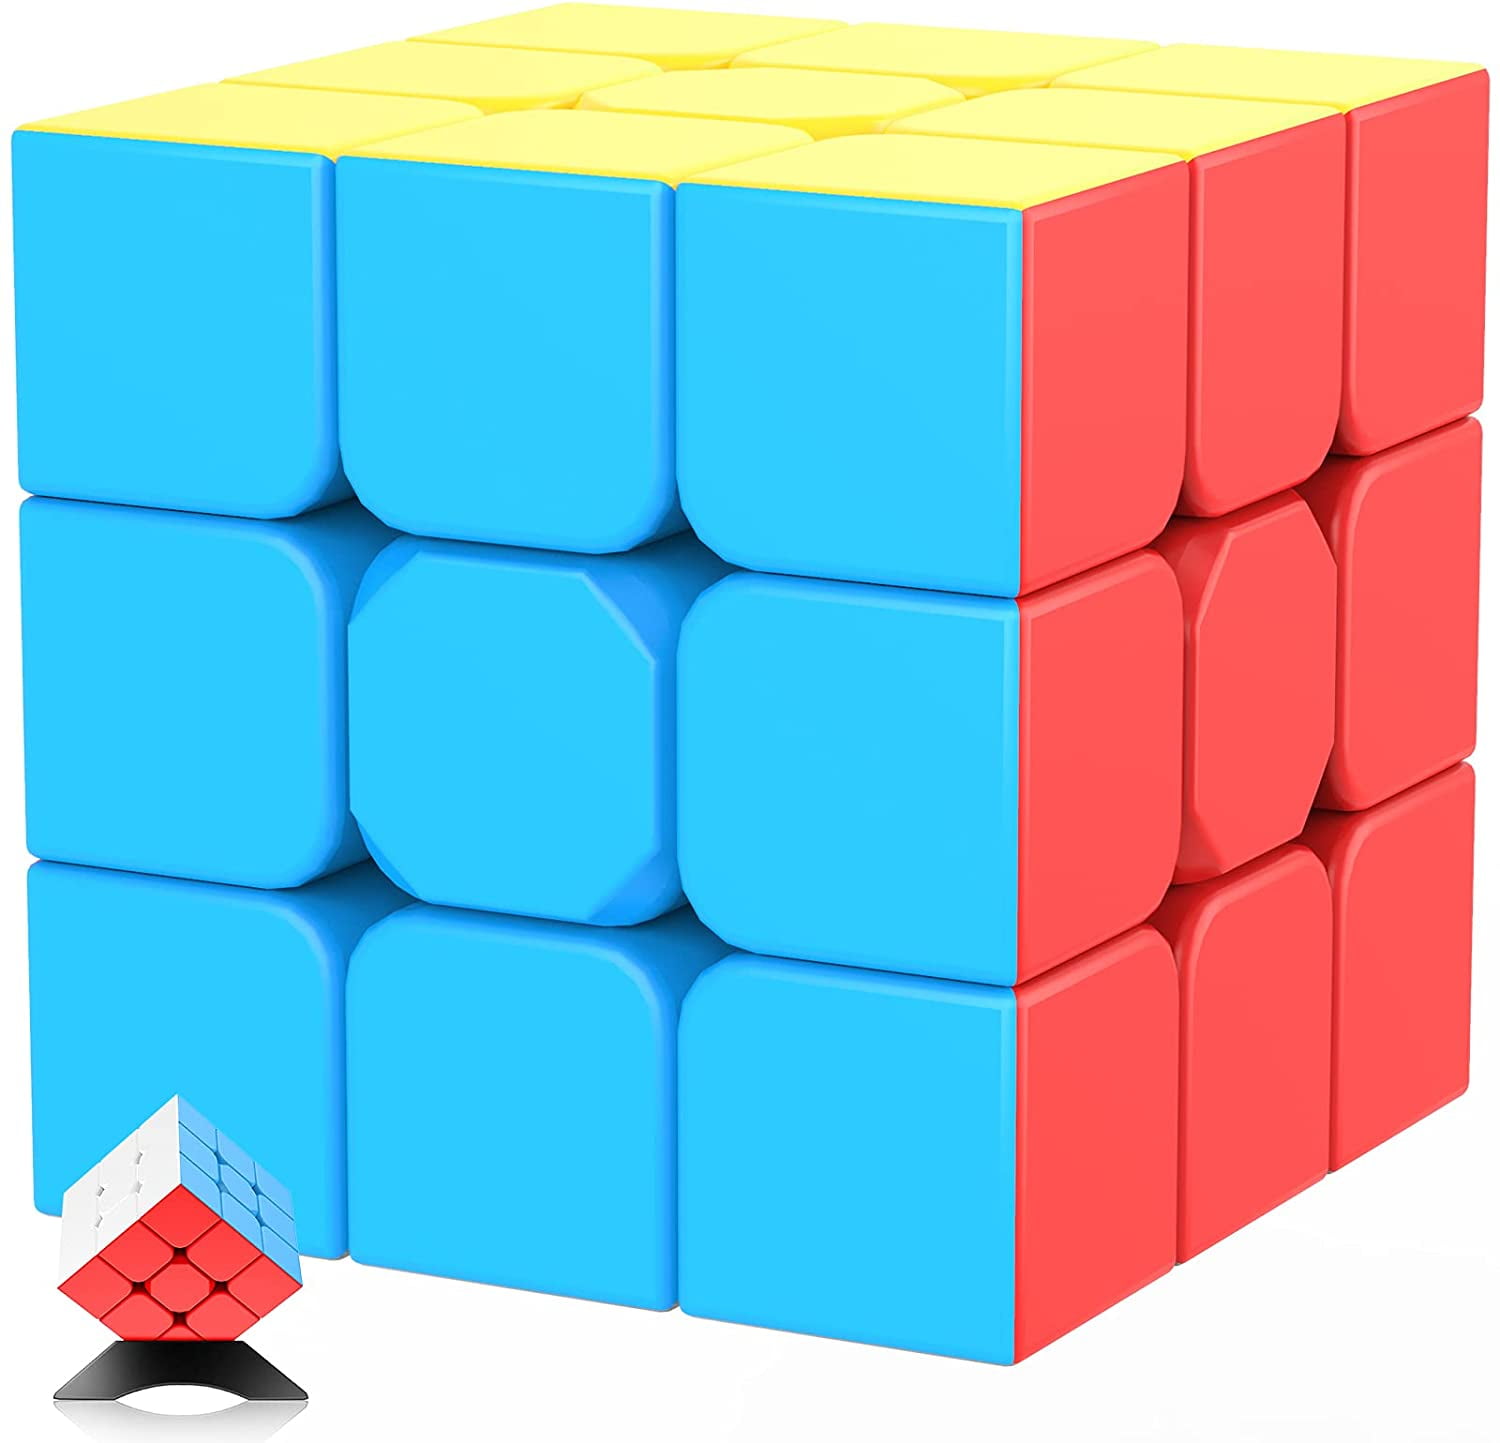 GAN 356 M, 3x3 Magnetic Speed Cube Puzzle Game Magic Cube, Lite Version,  Stickerless 